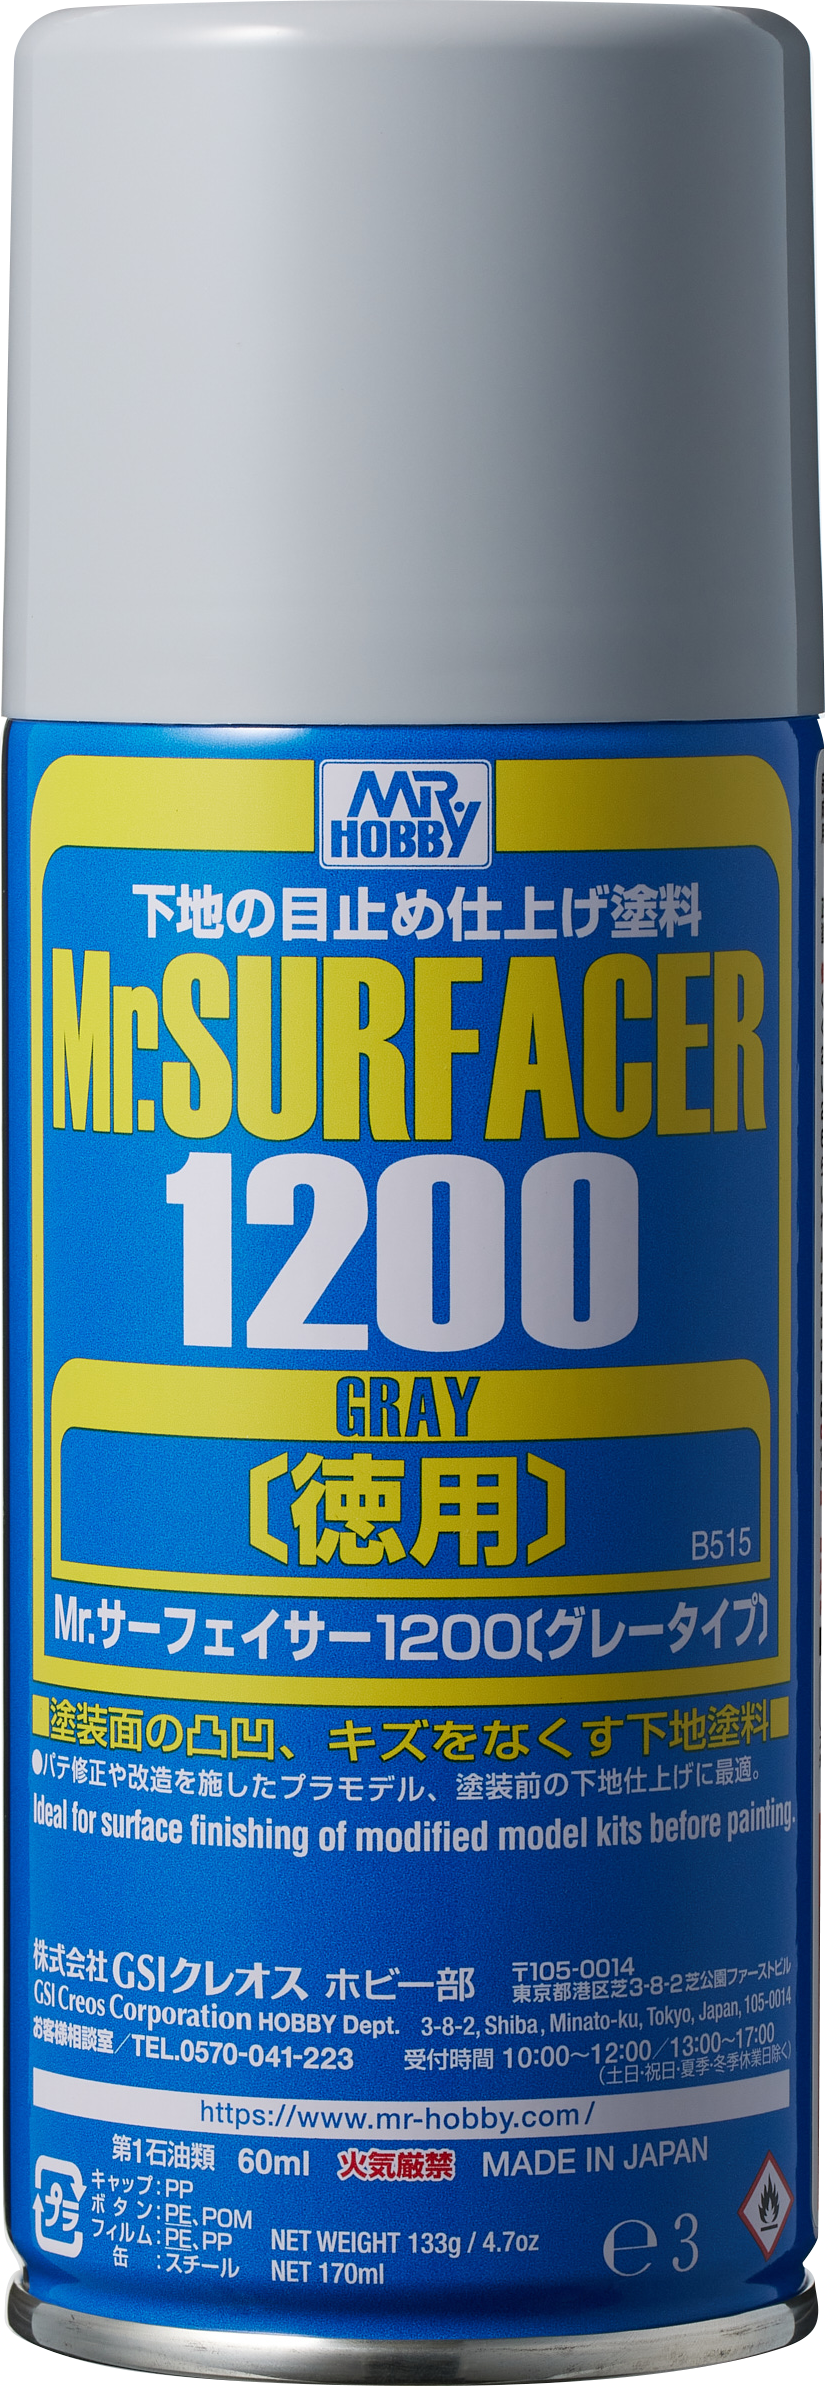 B515: Mr Surfacer Spray 1200